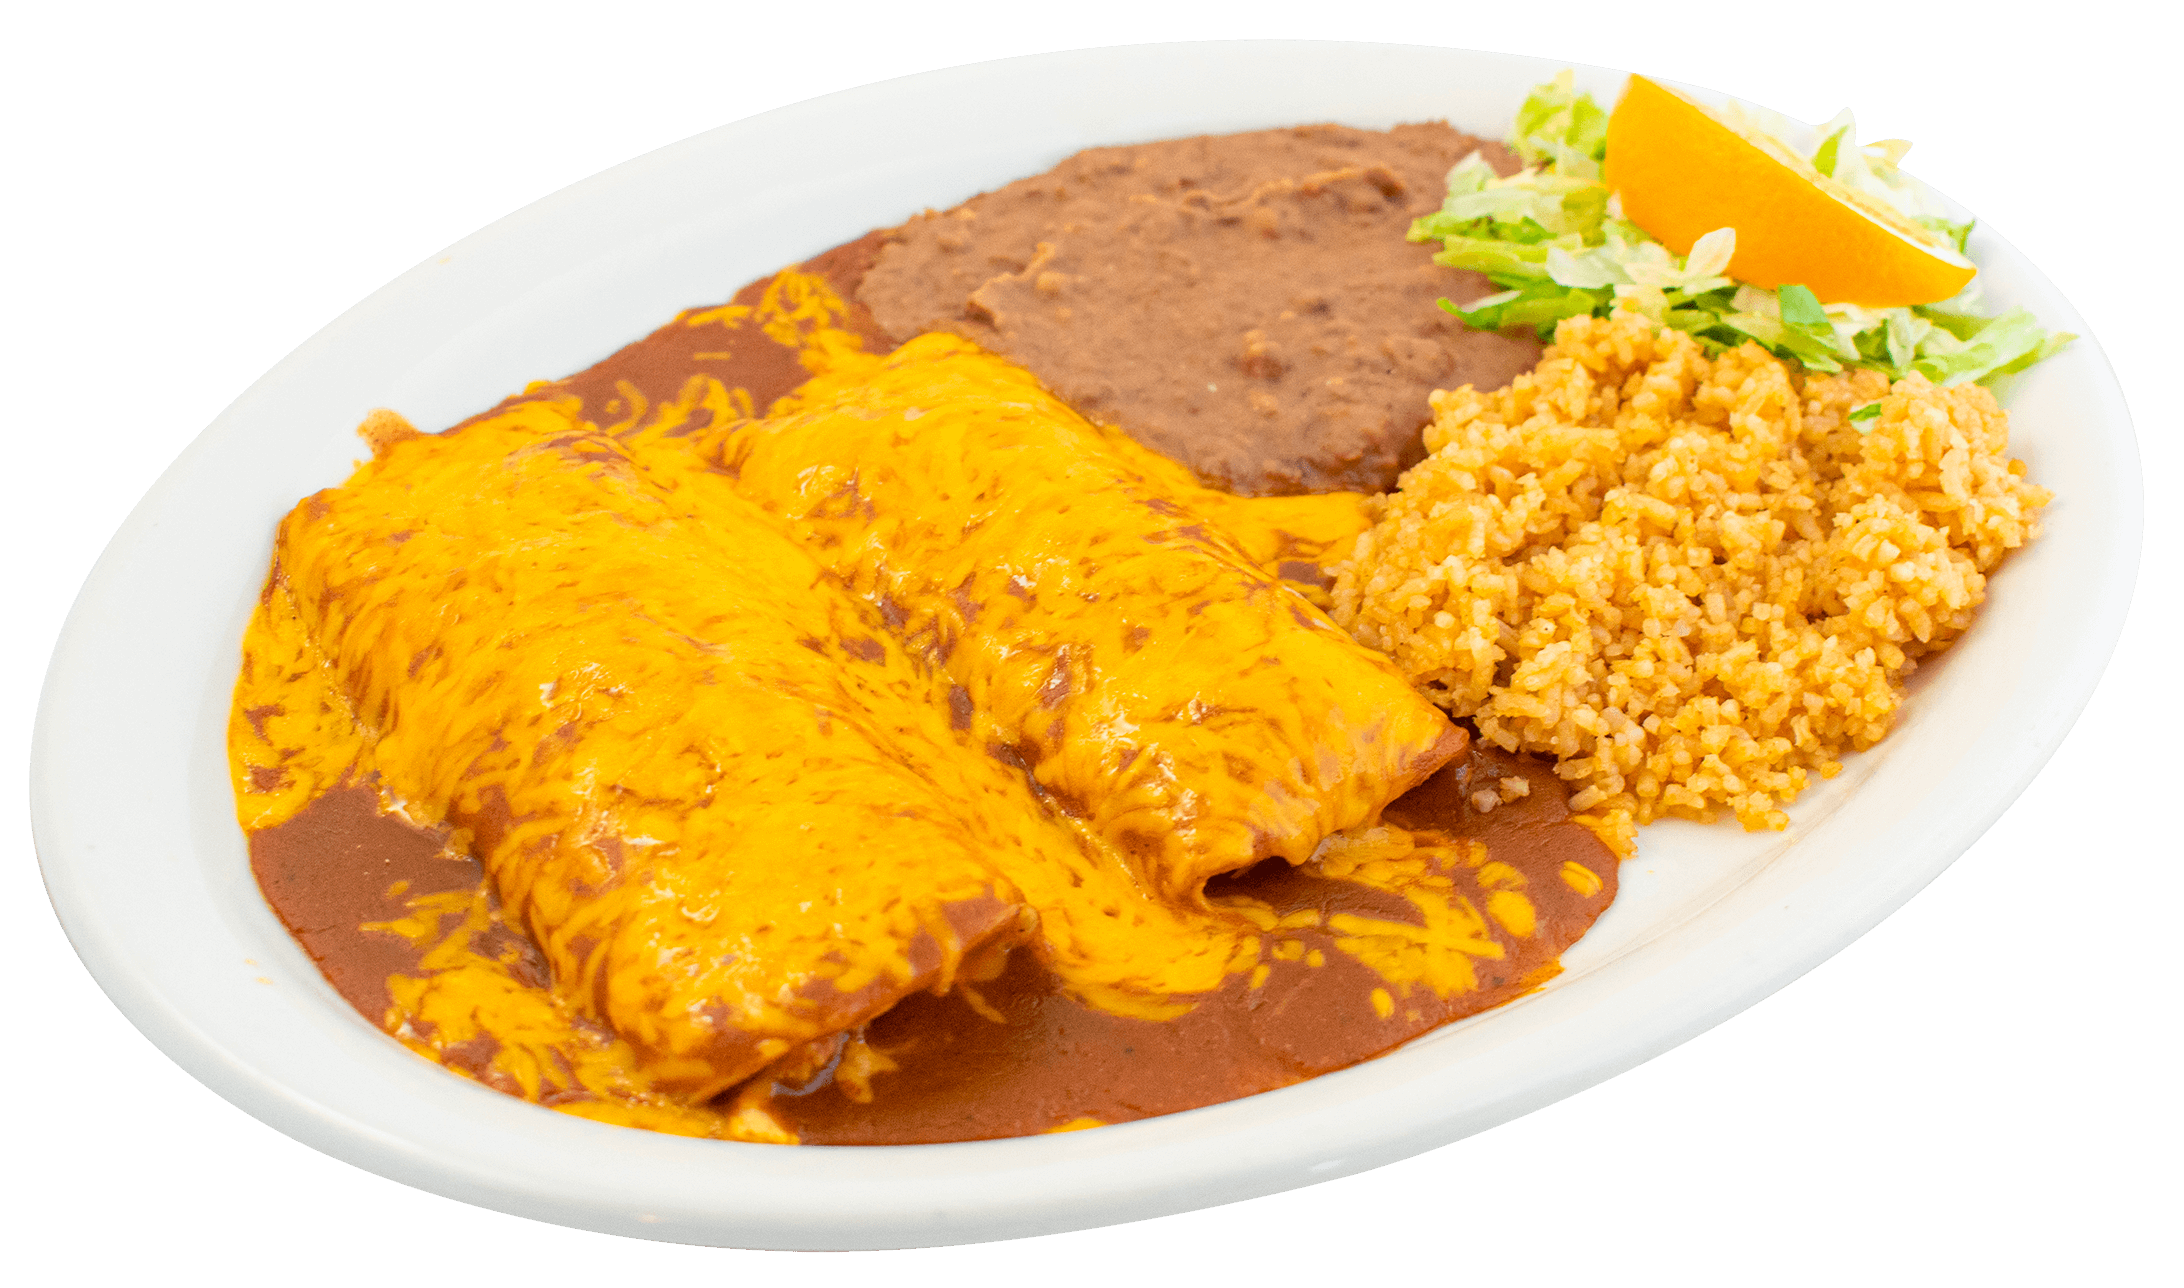 2 Enchiladas